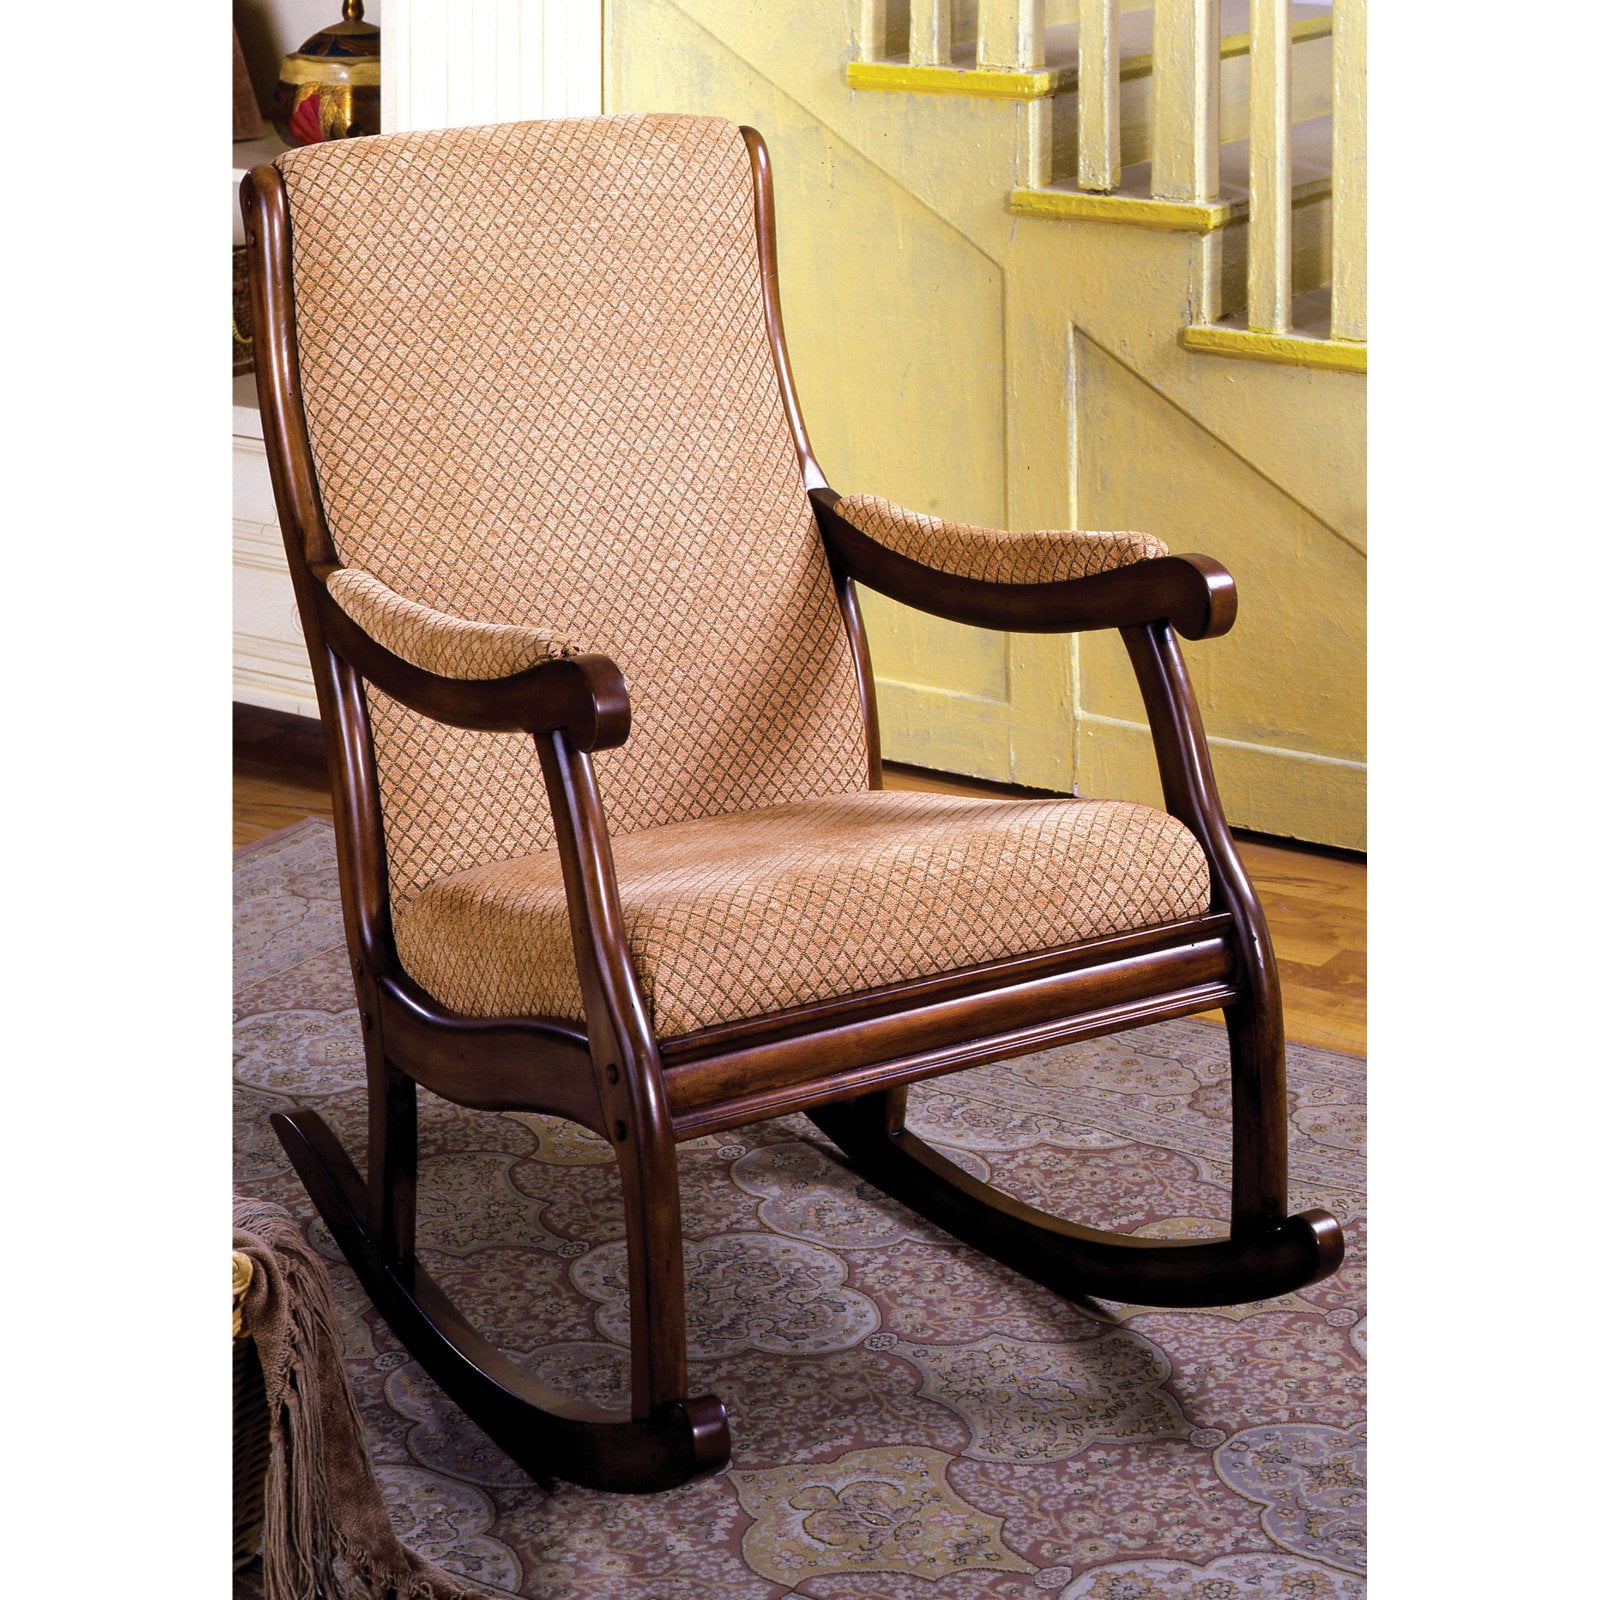 Furniture of America Bernardette Upholstered Rocking Chair -
Walmart.com - Walmart.com